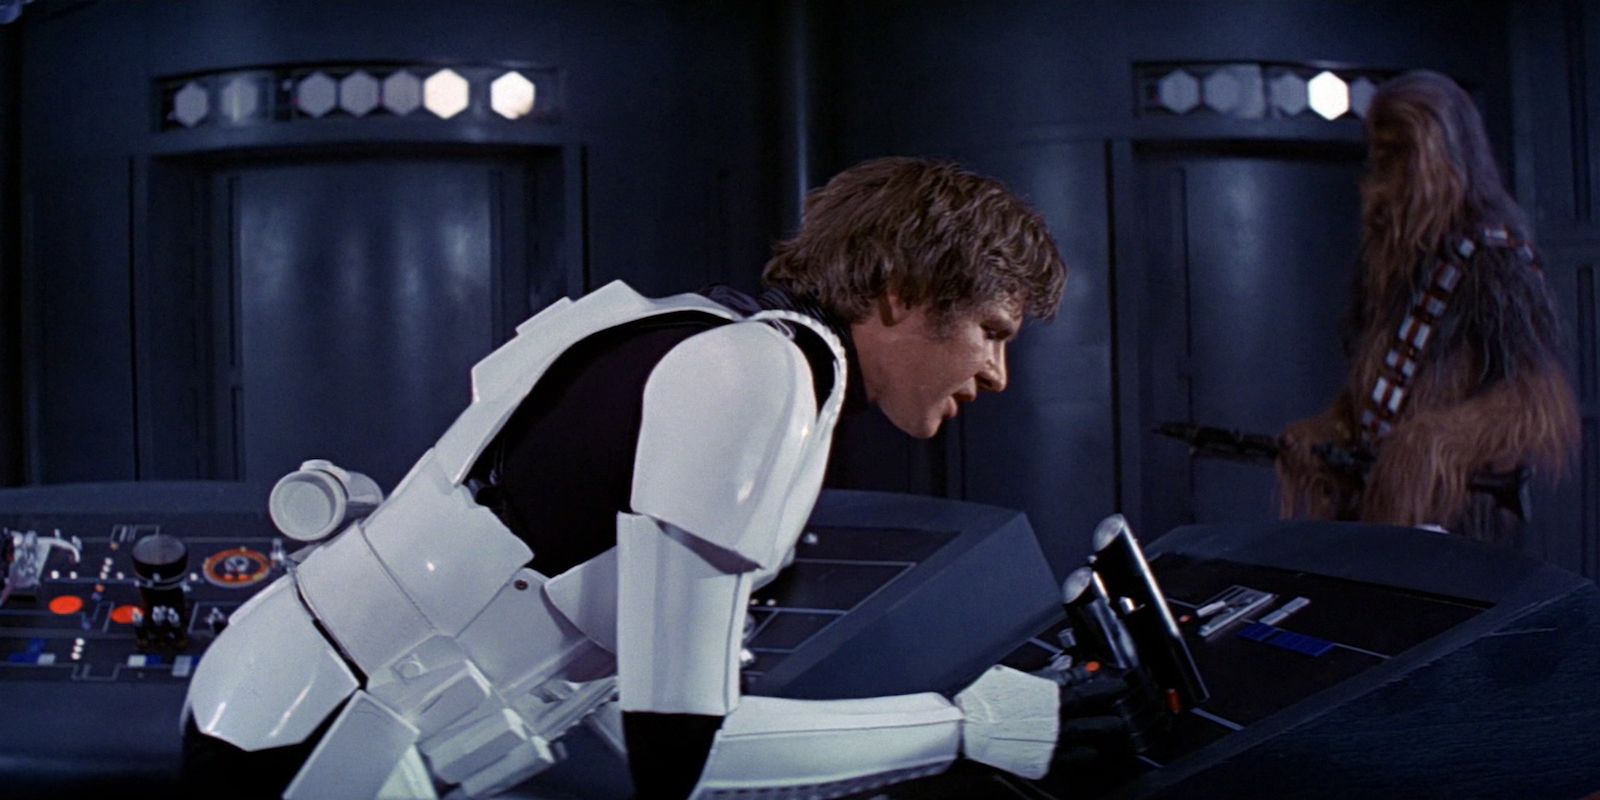 Han Solo using the Death Star intercom in Star Wars